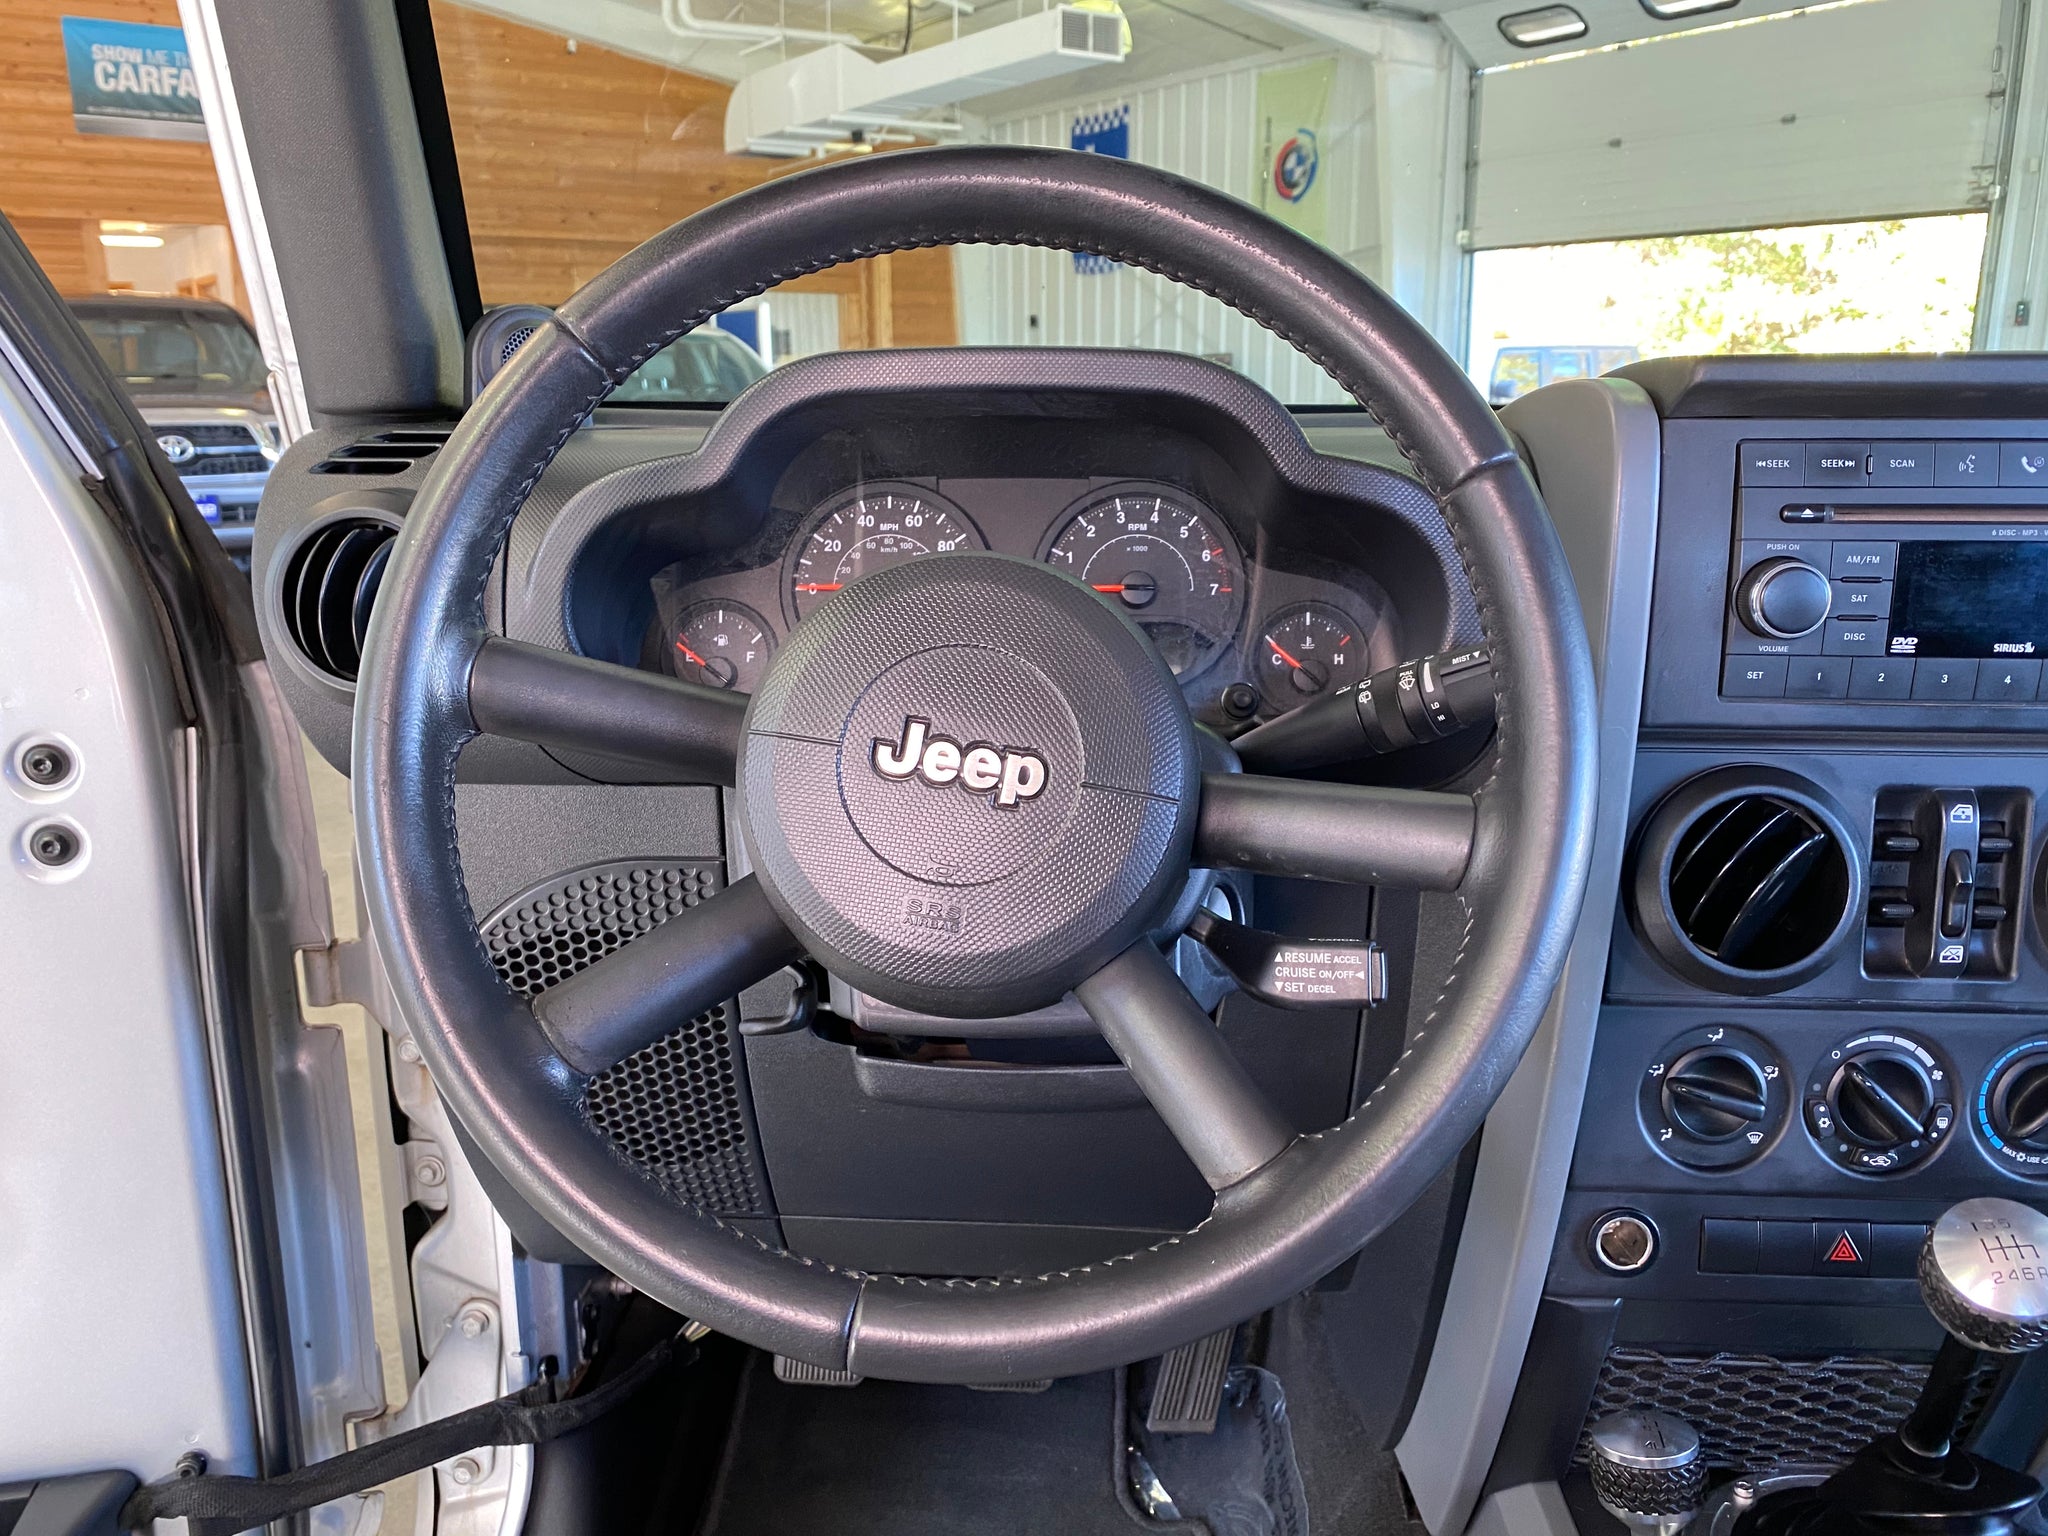 2009 Jeep Wrangler Unlimited 4WD Manual - ShiftedMN